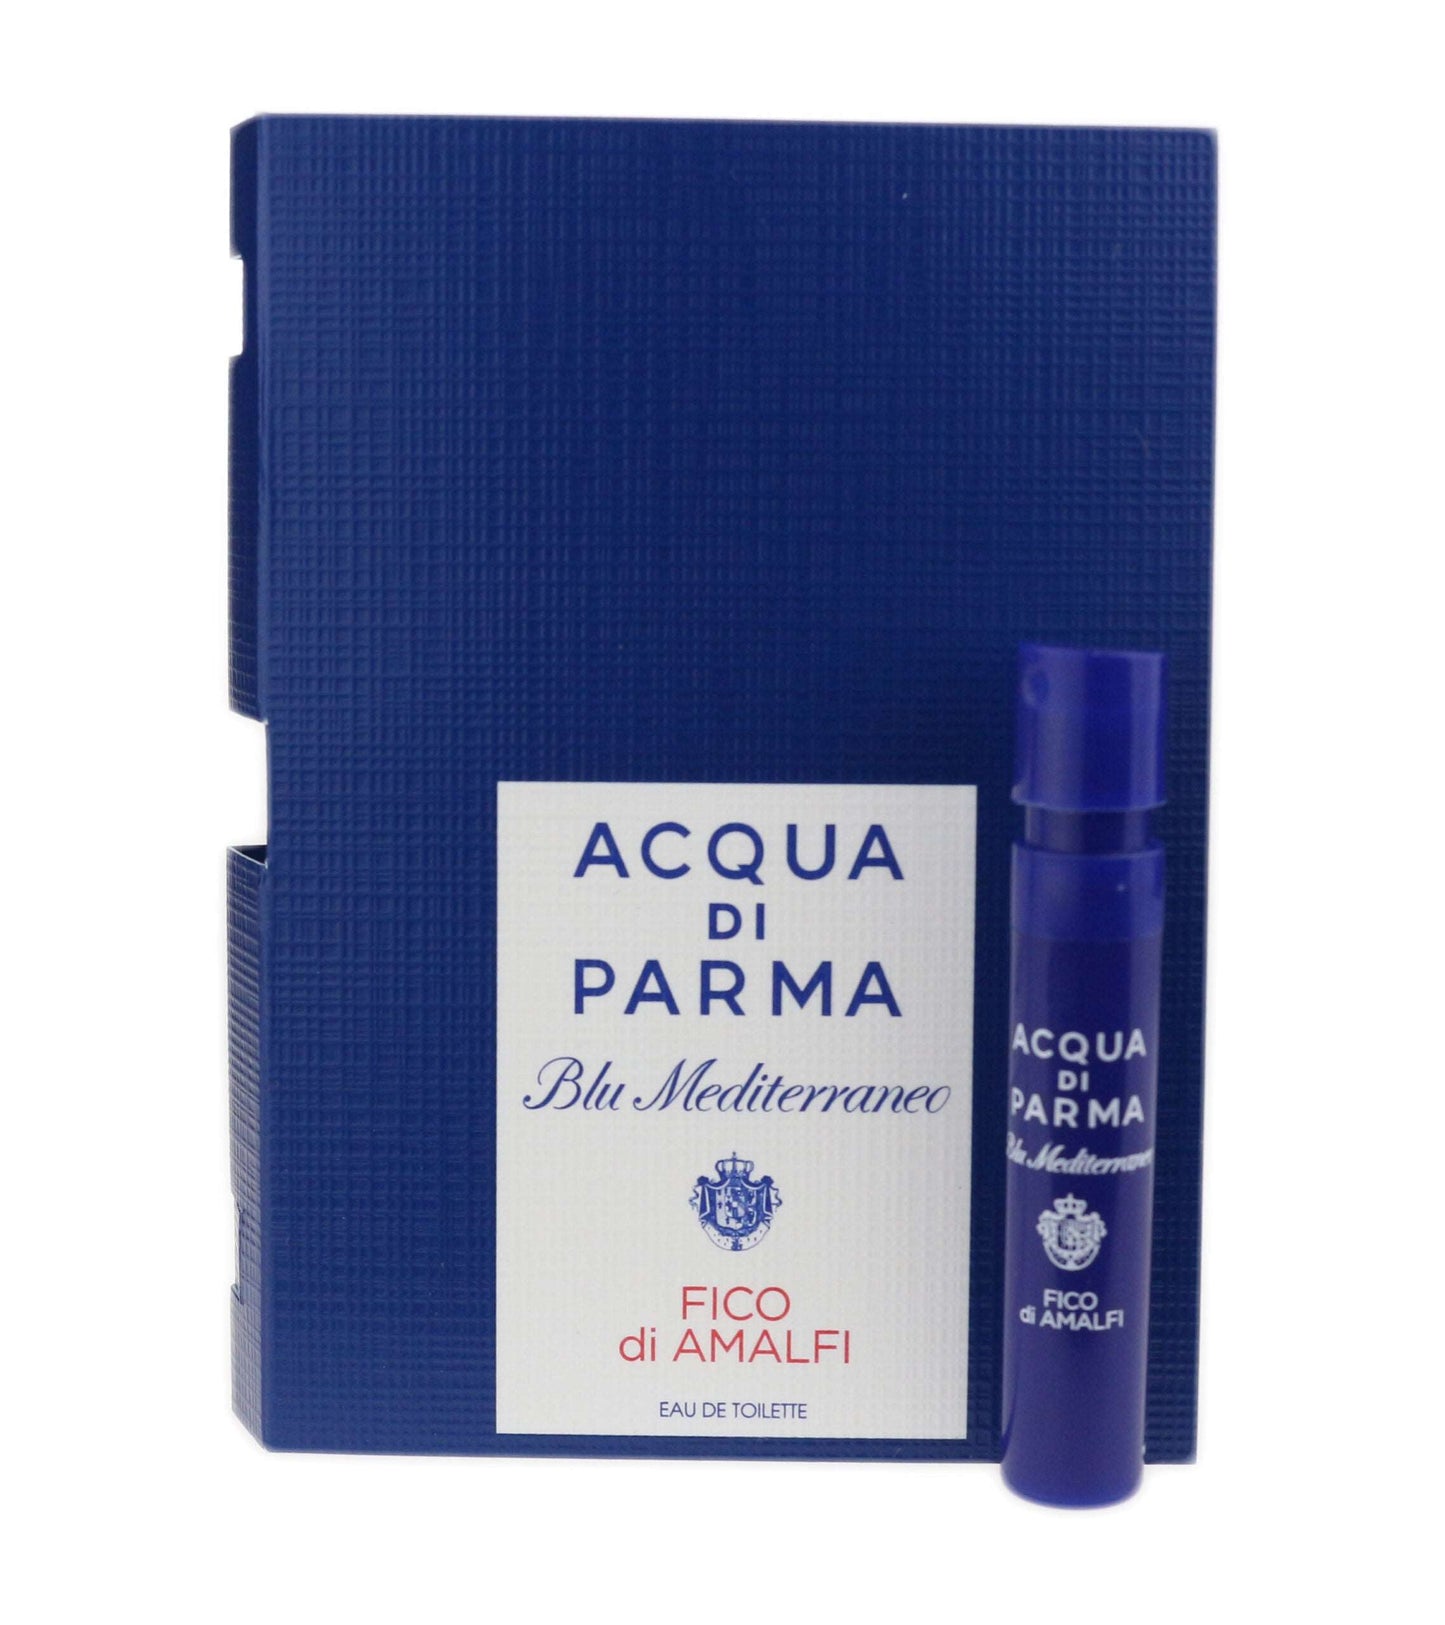 Acqua Di Parma Fico Di Amalfi 1.2ml-0.04 fl.oz. muestras oficiales de perfumes